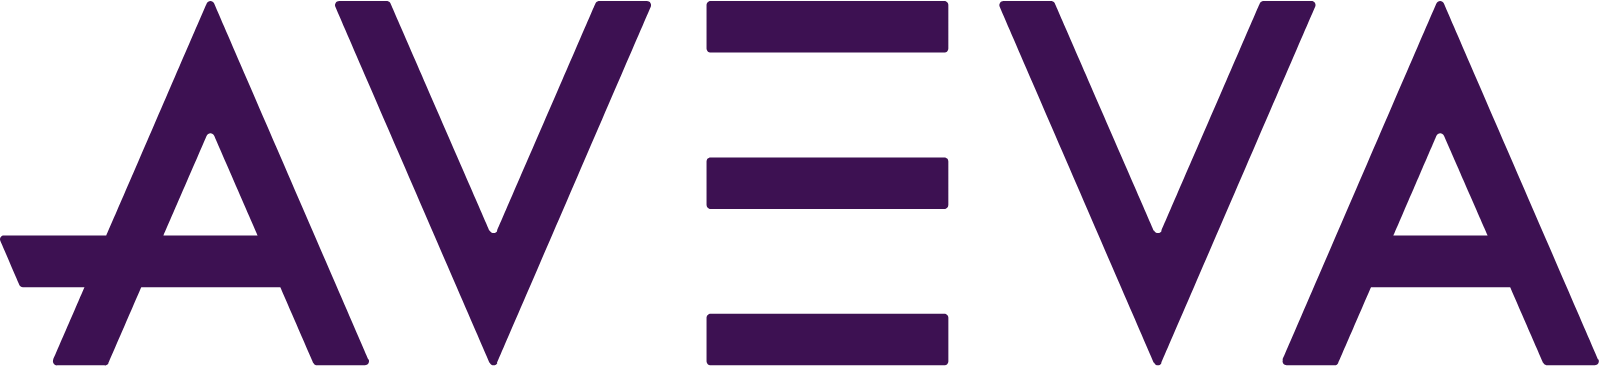 AVEVA logo large (transparent PNG)